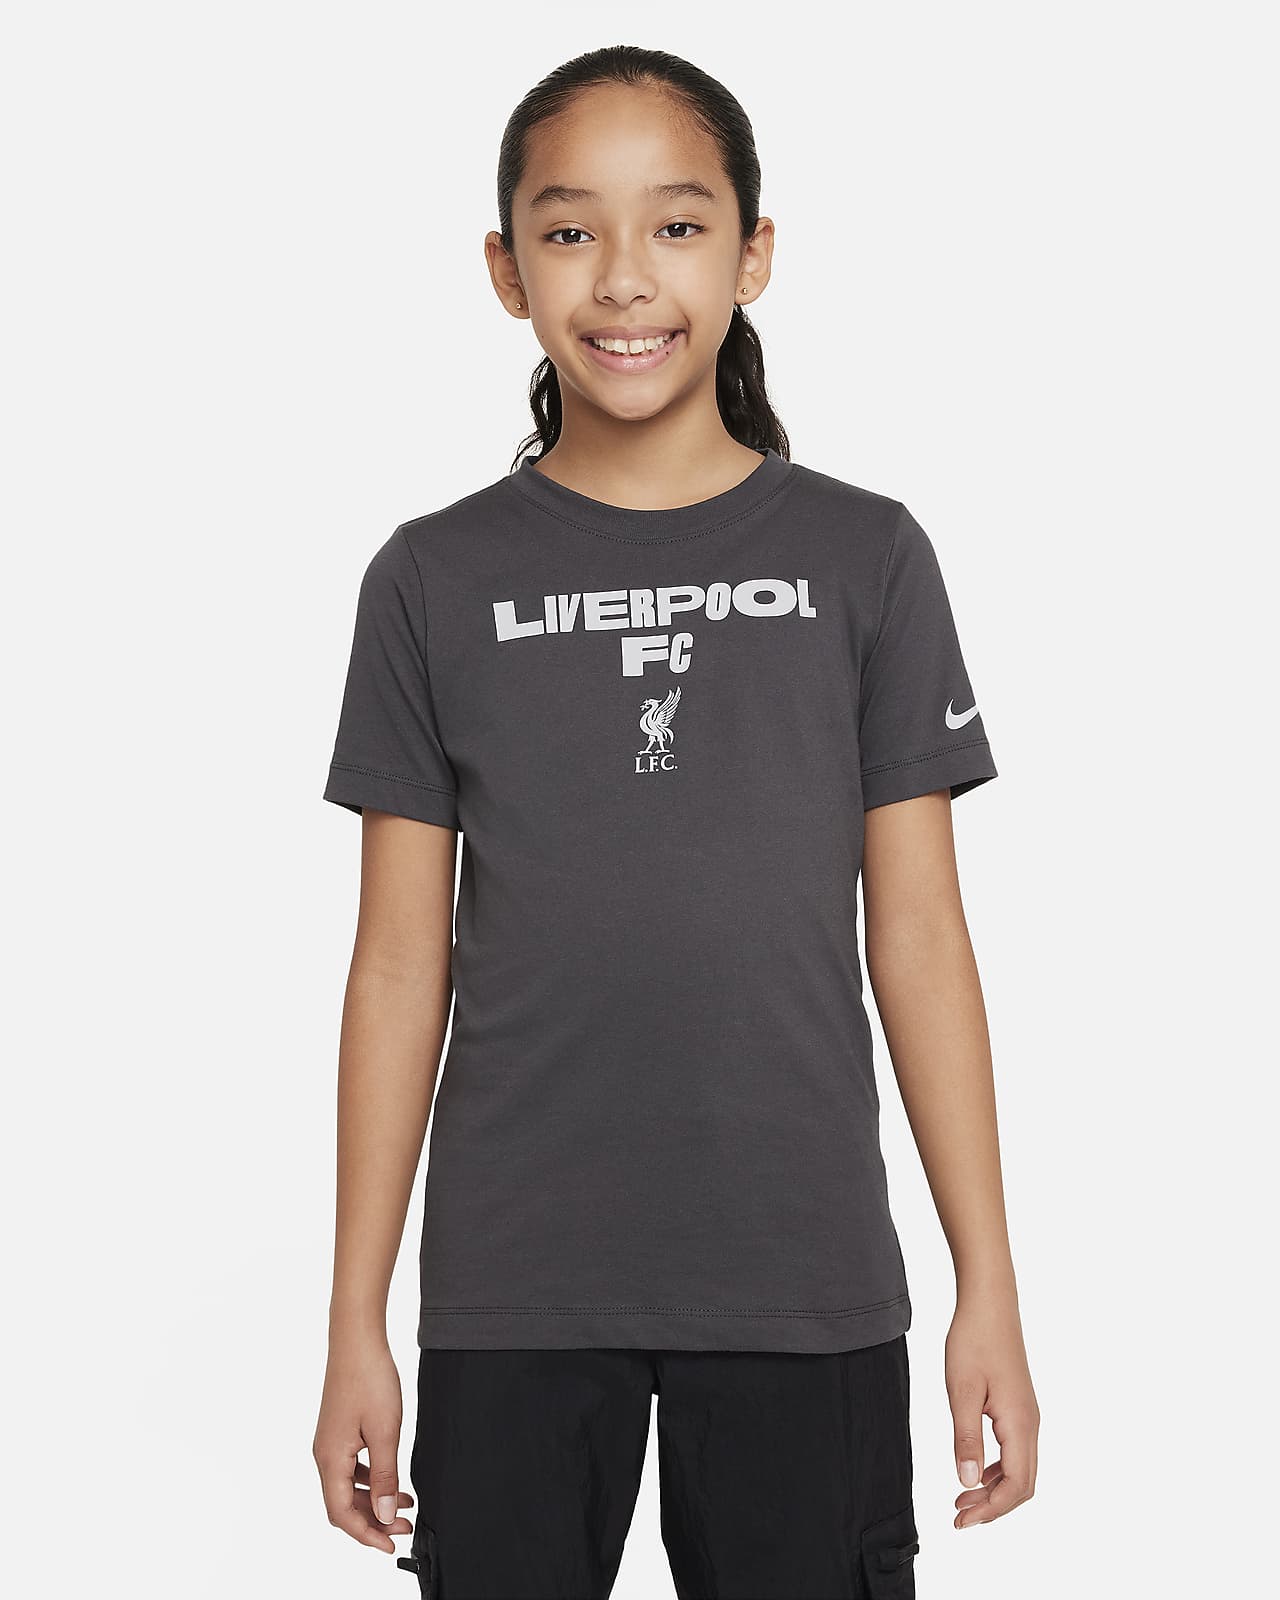 Liverpool FC Nike Fußball-T-Shirt für ältere Kinder